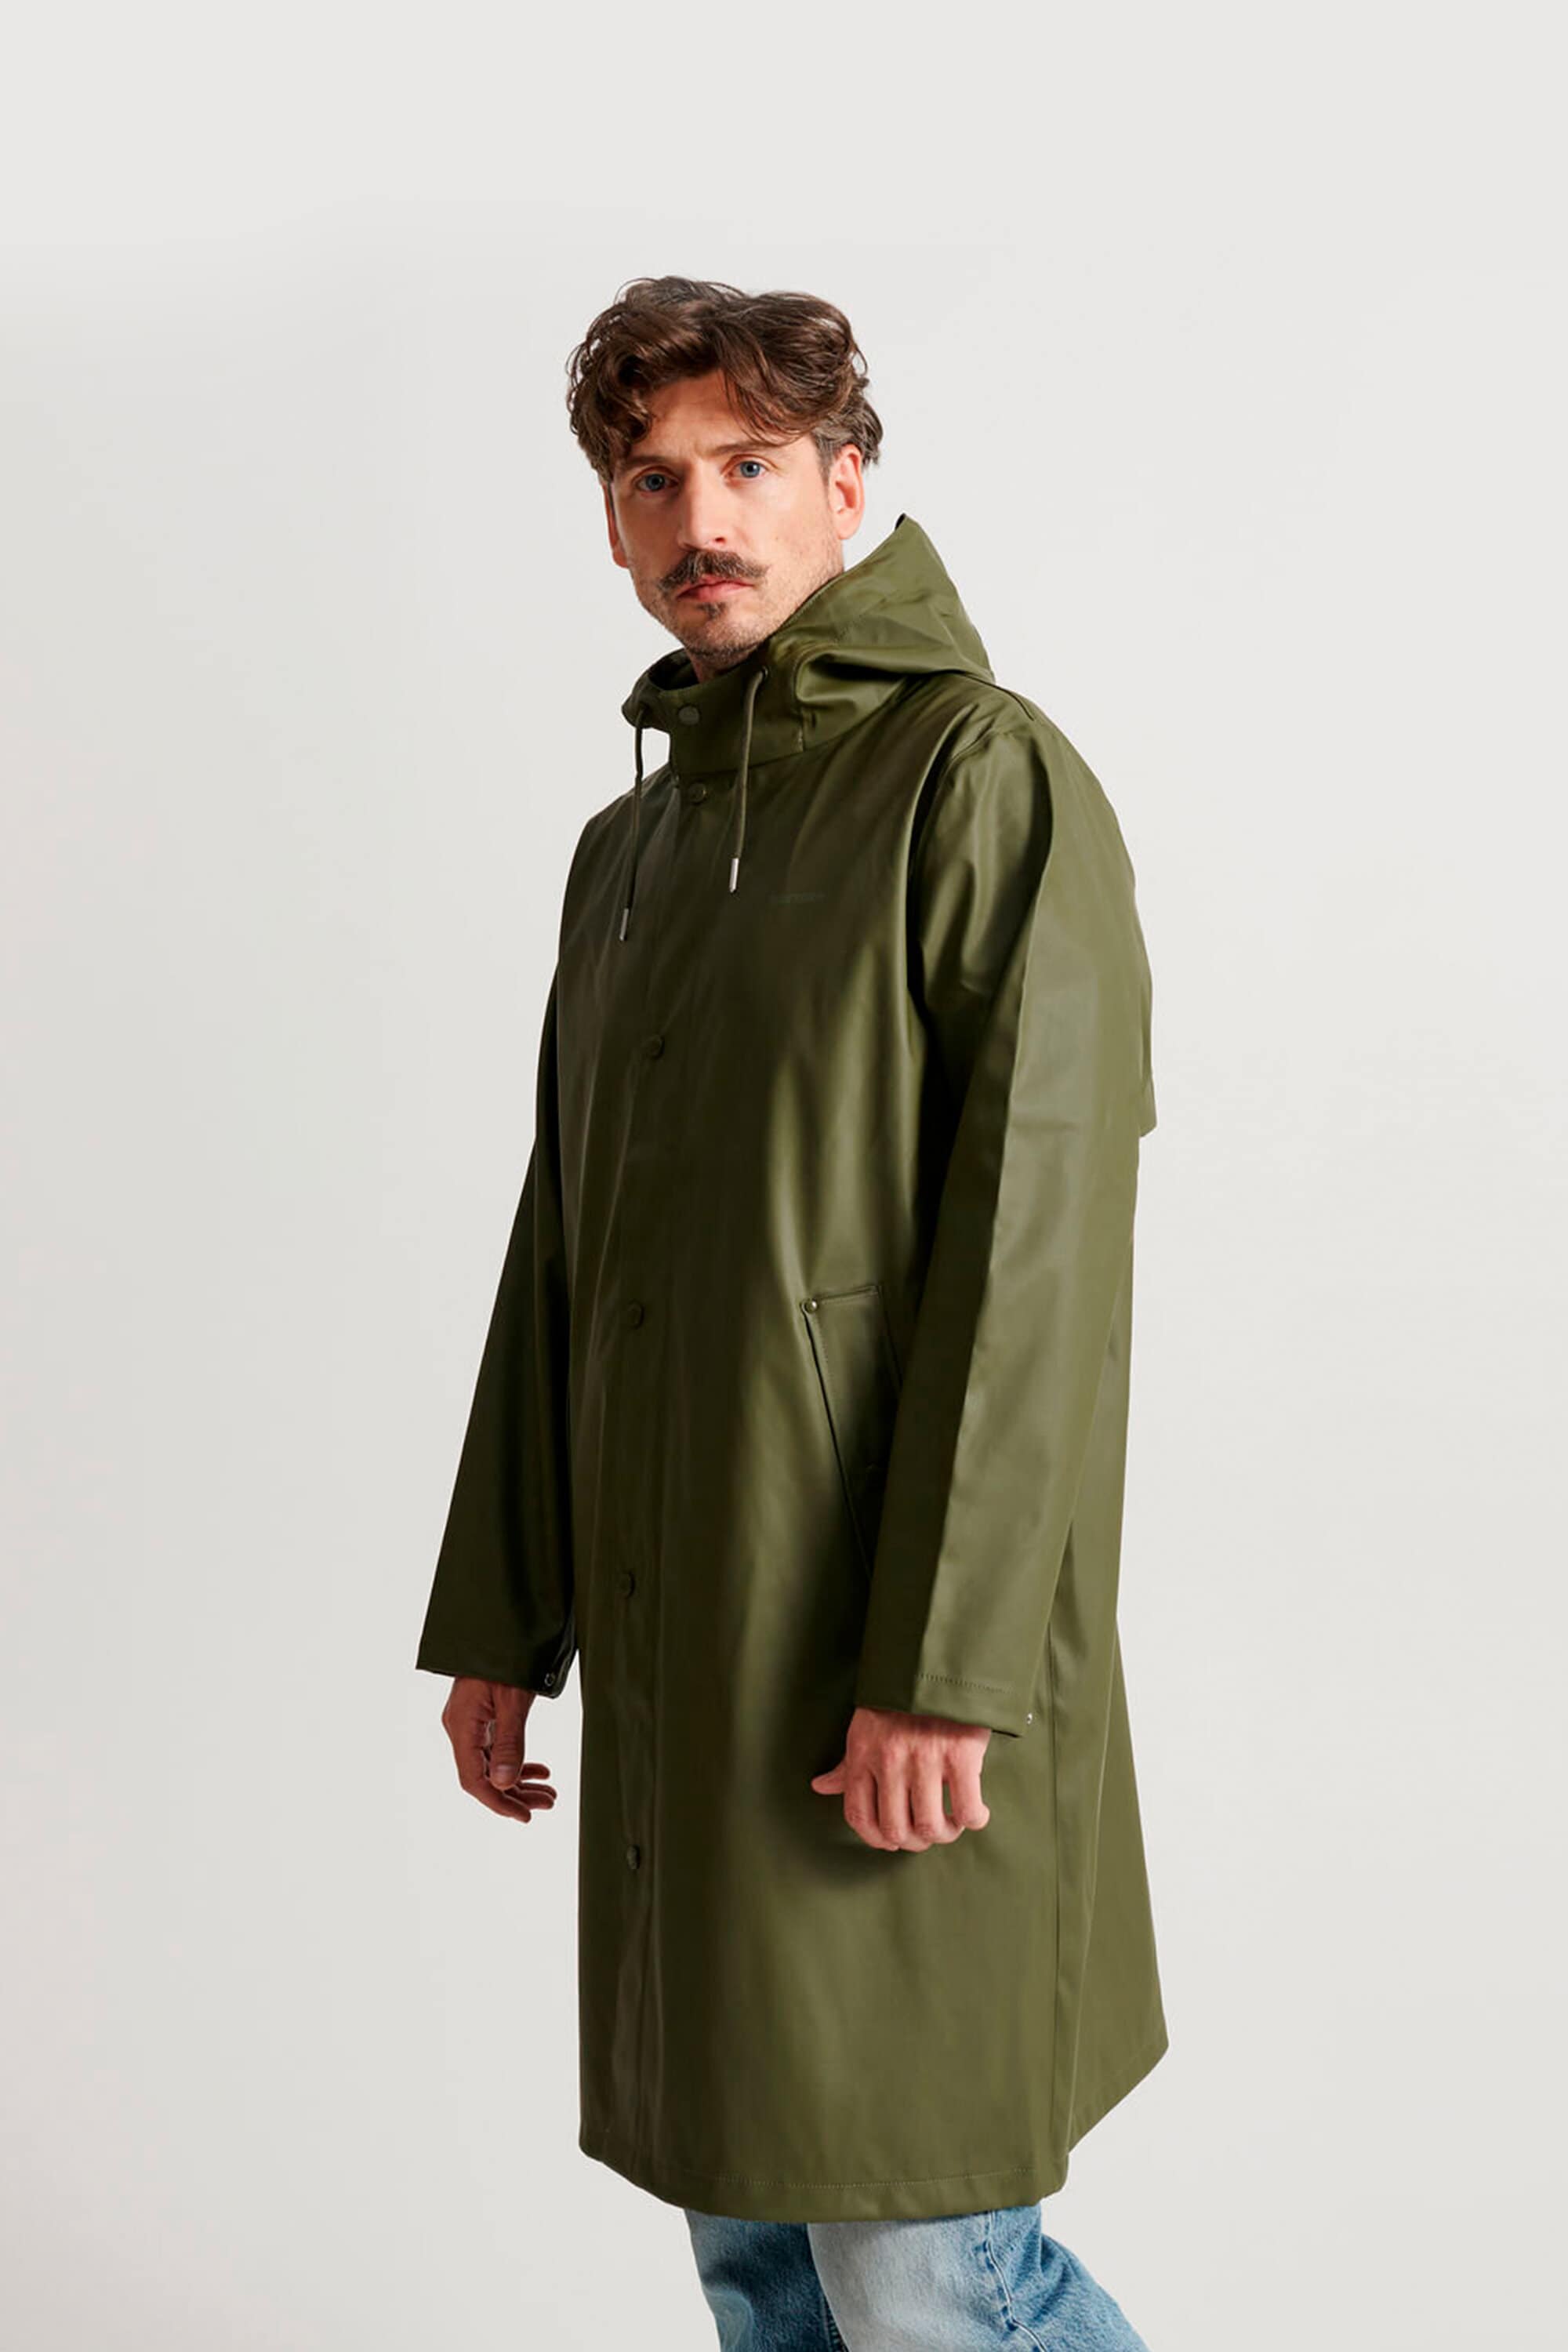 High quality rain jackets for men | Tretorn